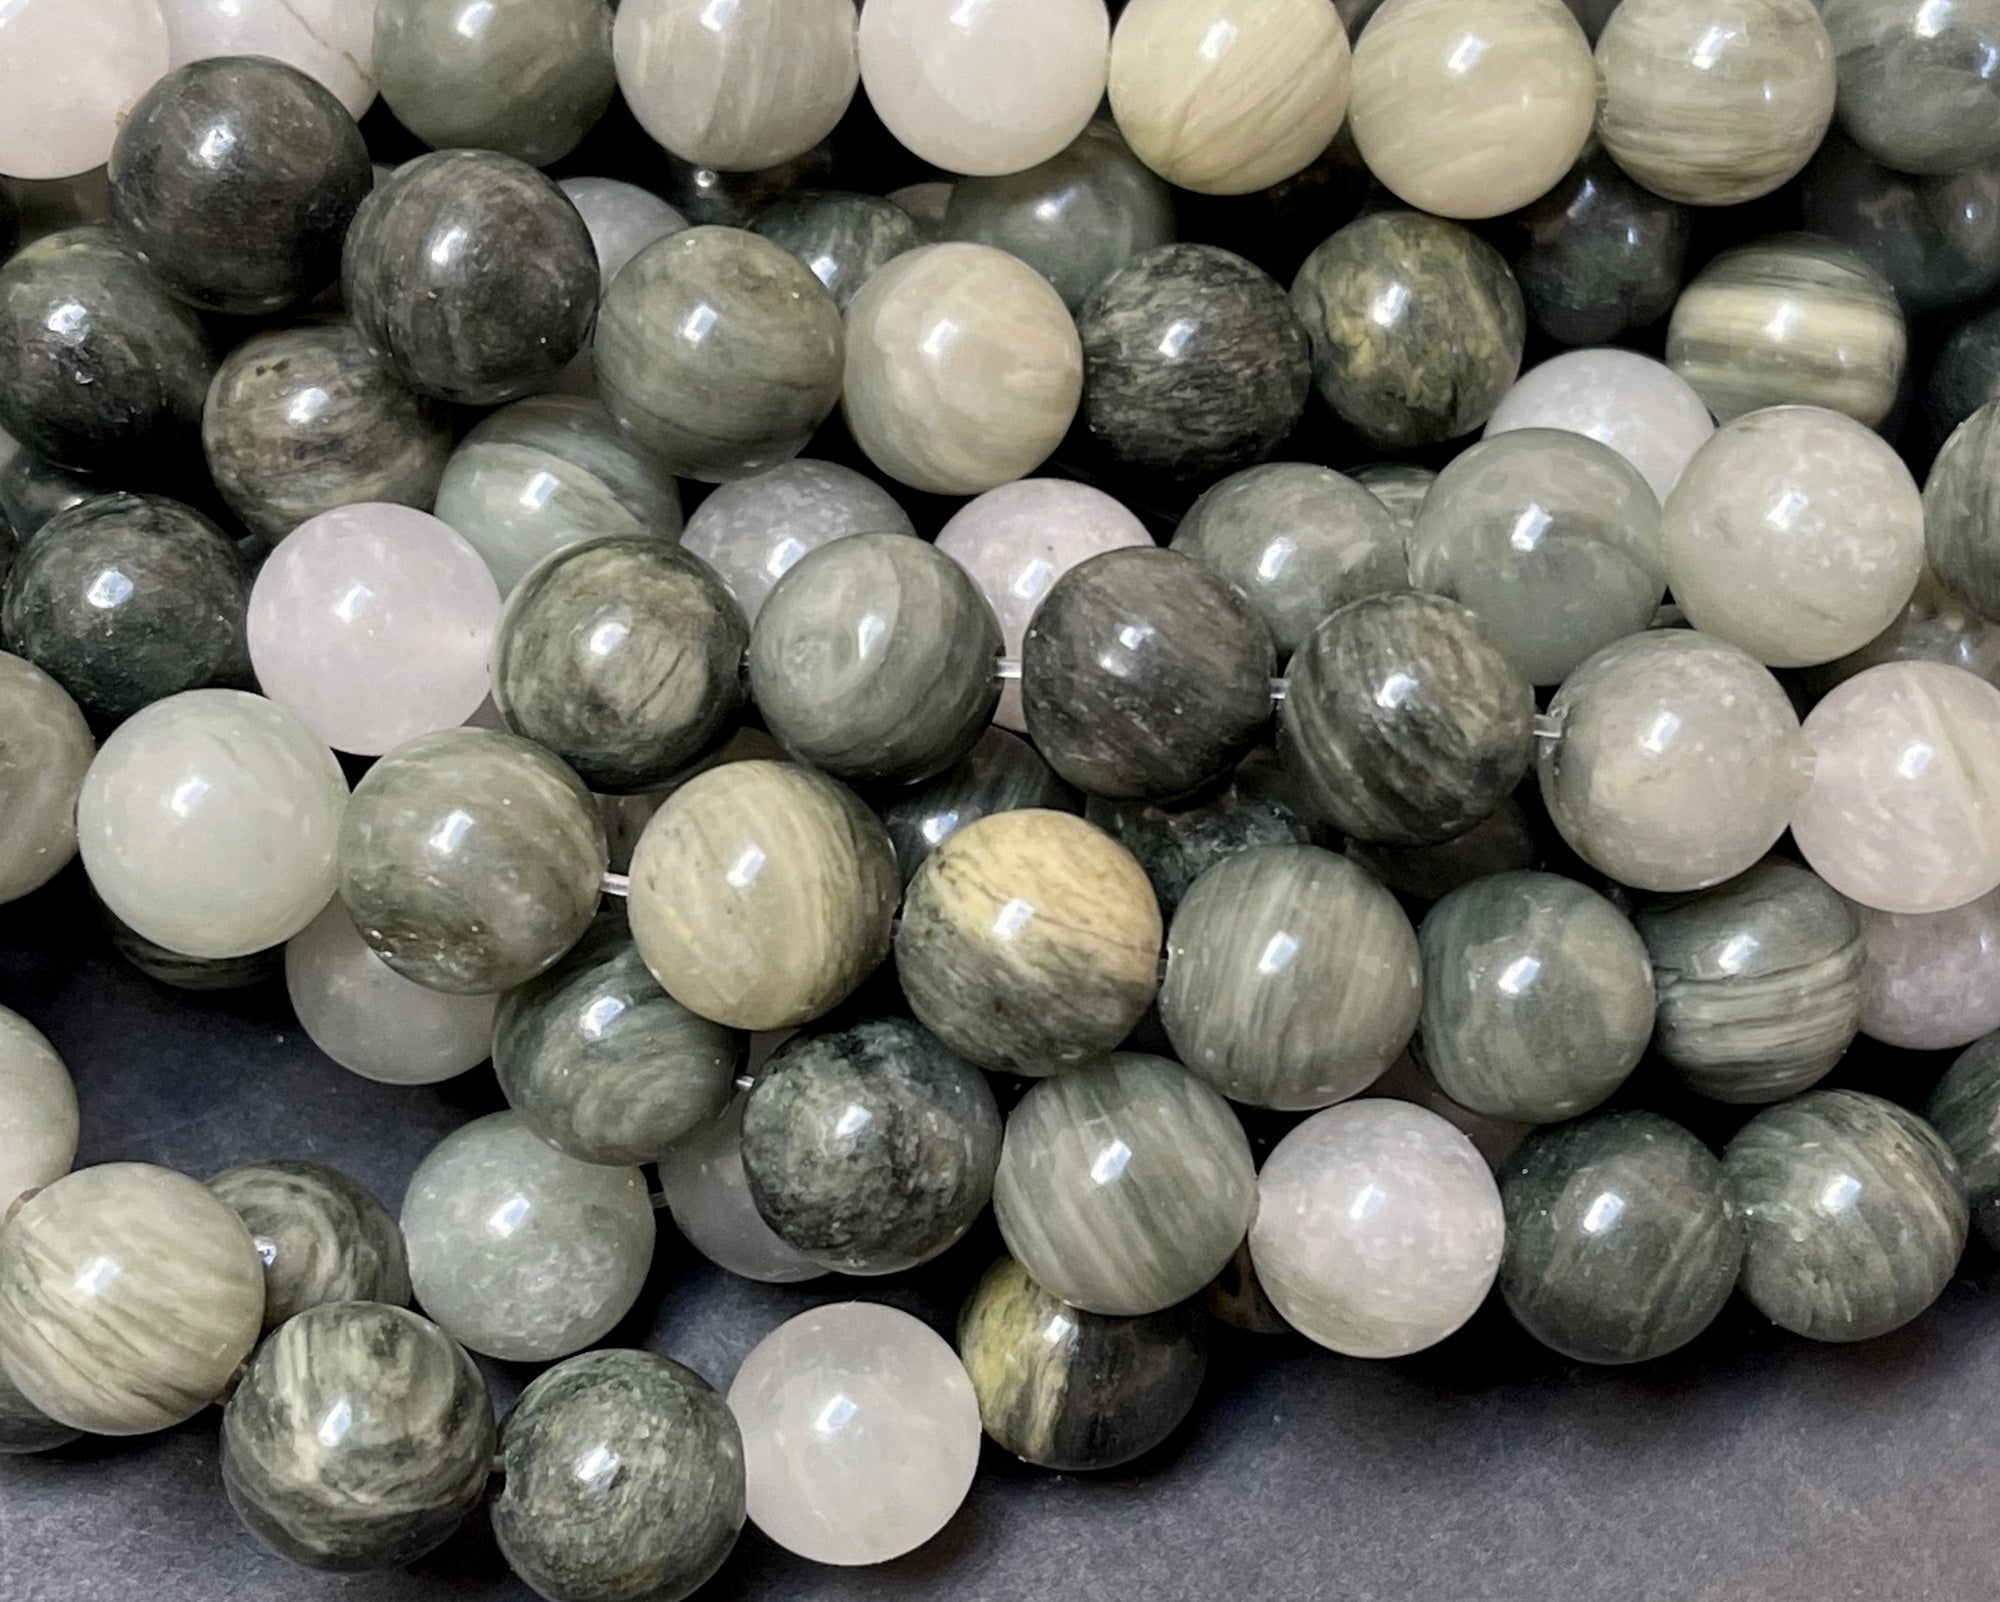 Green Grass Jasper 8mm round natural gemstone beads 15.5" strand